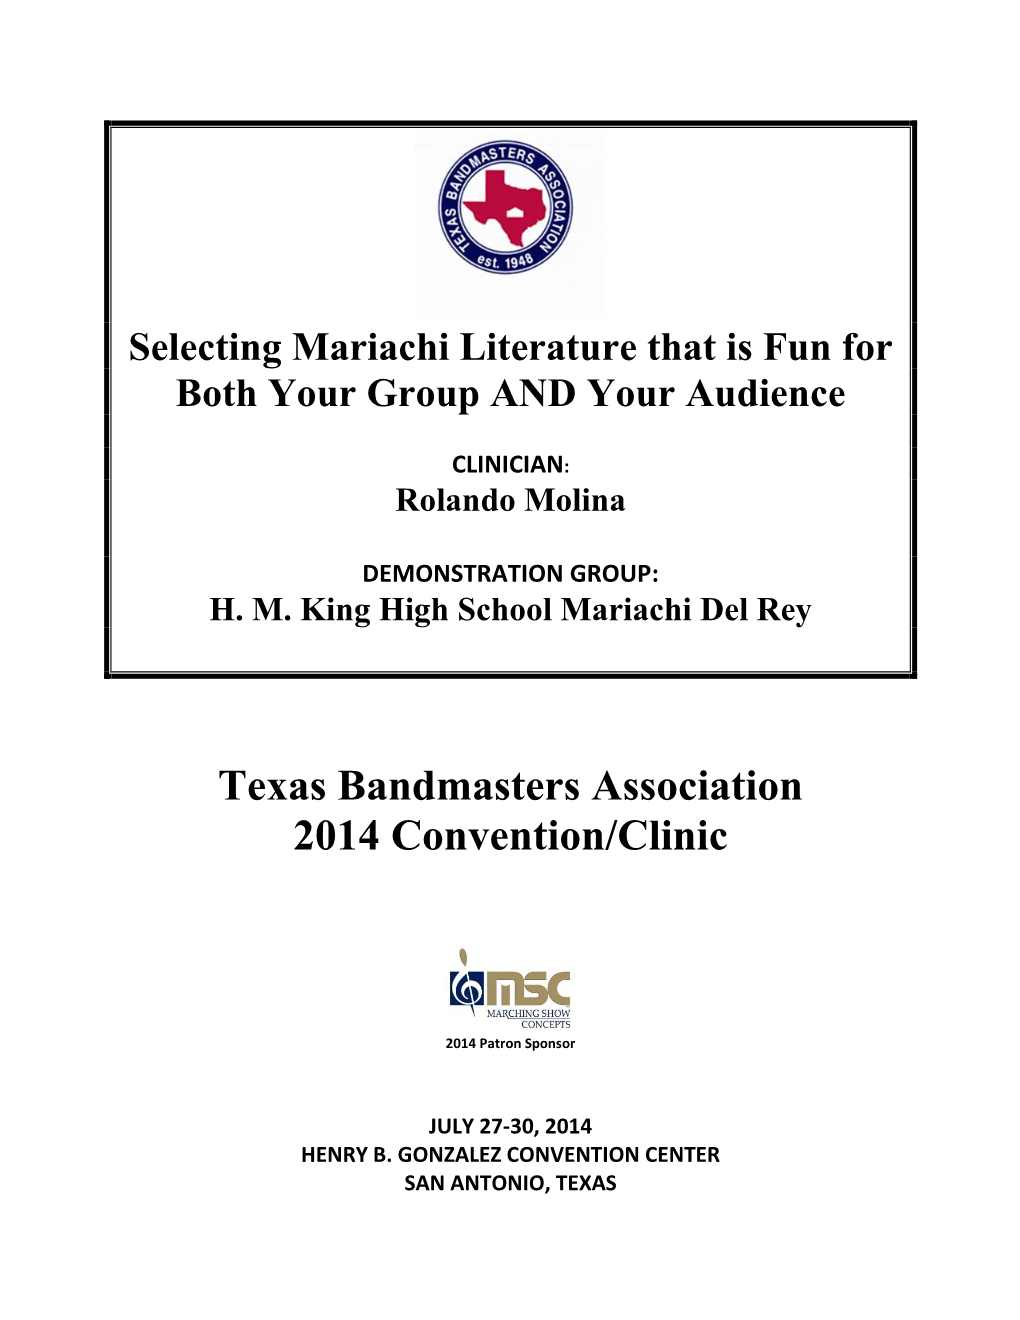 Texas Bandmasters Association 2014 Convention/Clinic